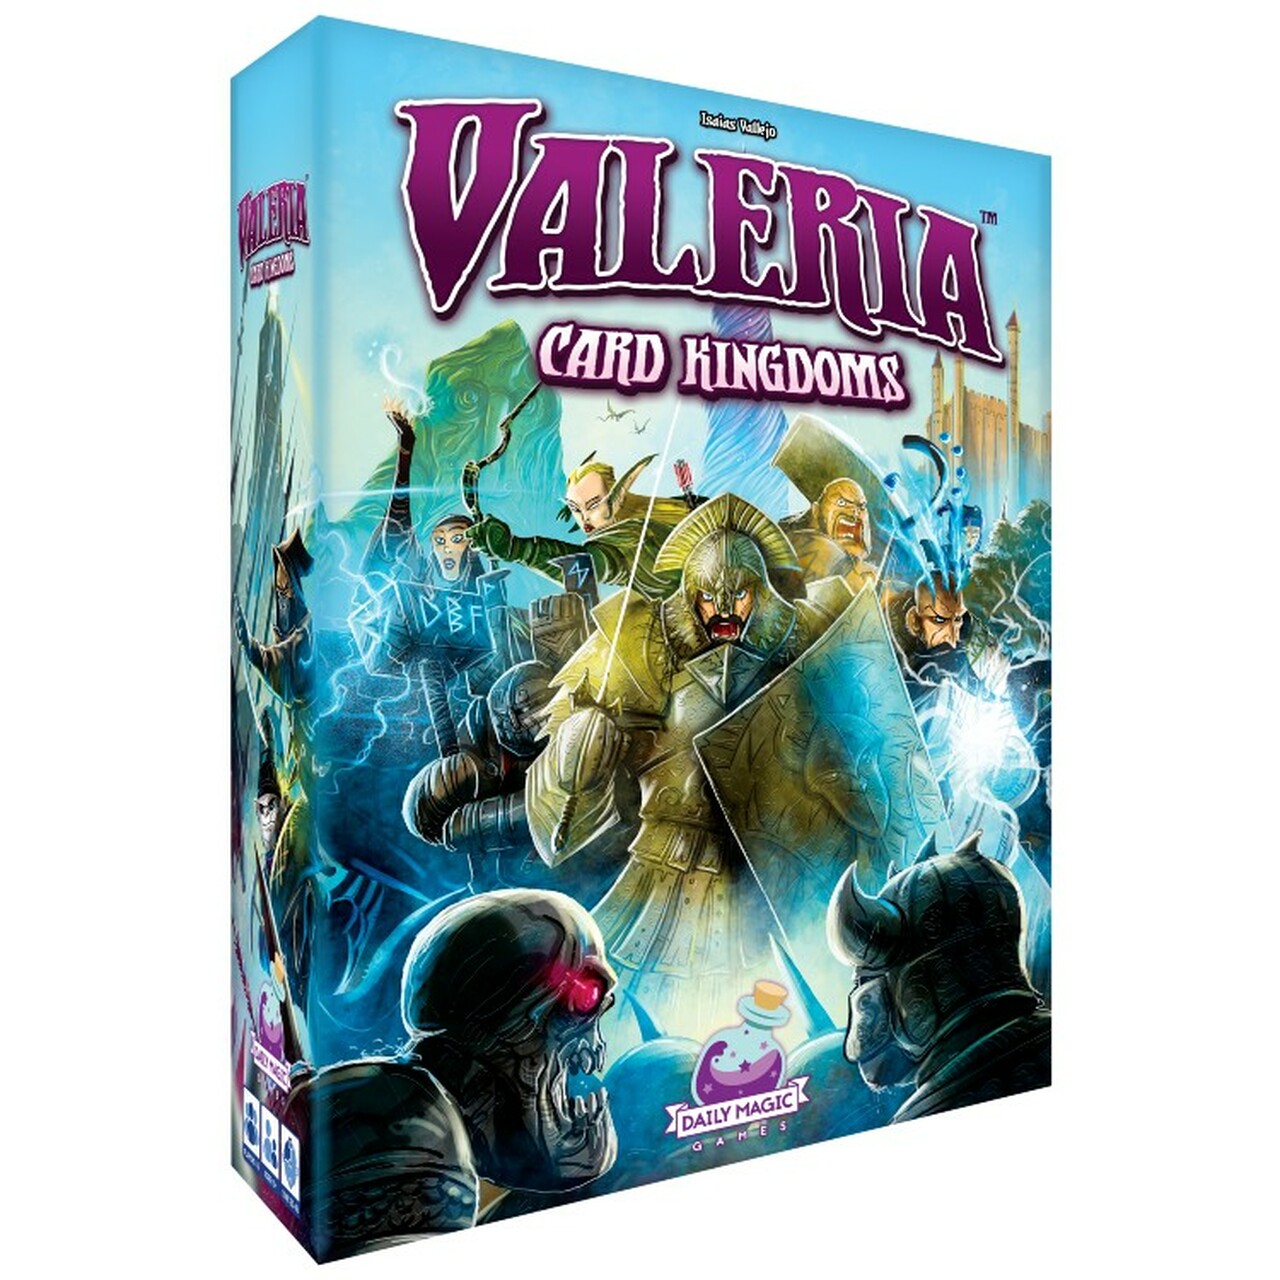 Valeria Card Kingdoms (2nd Edition) 